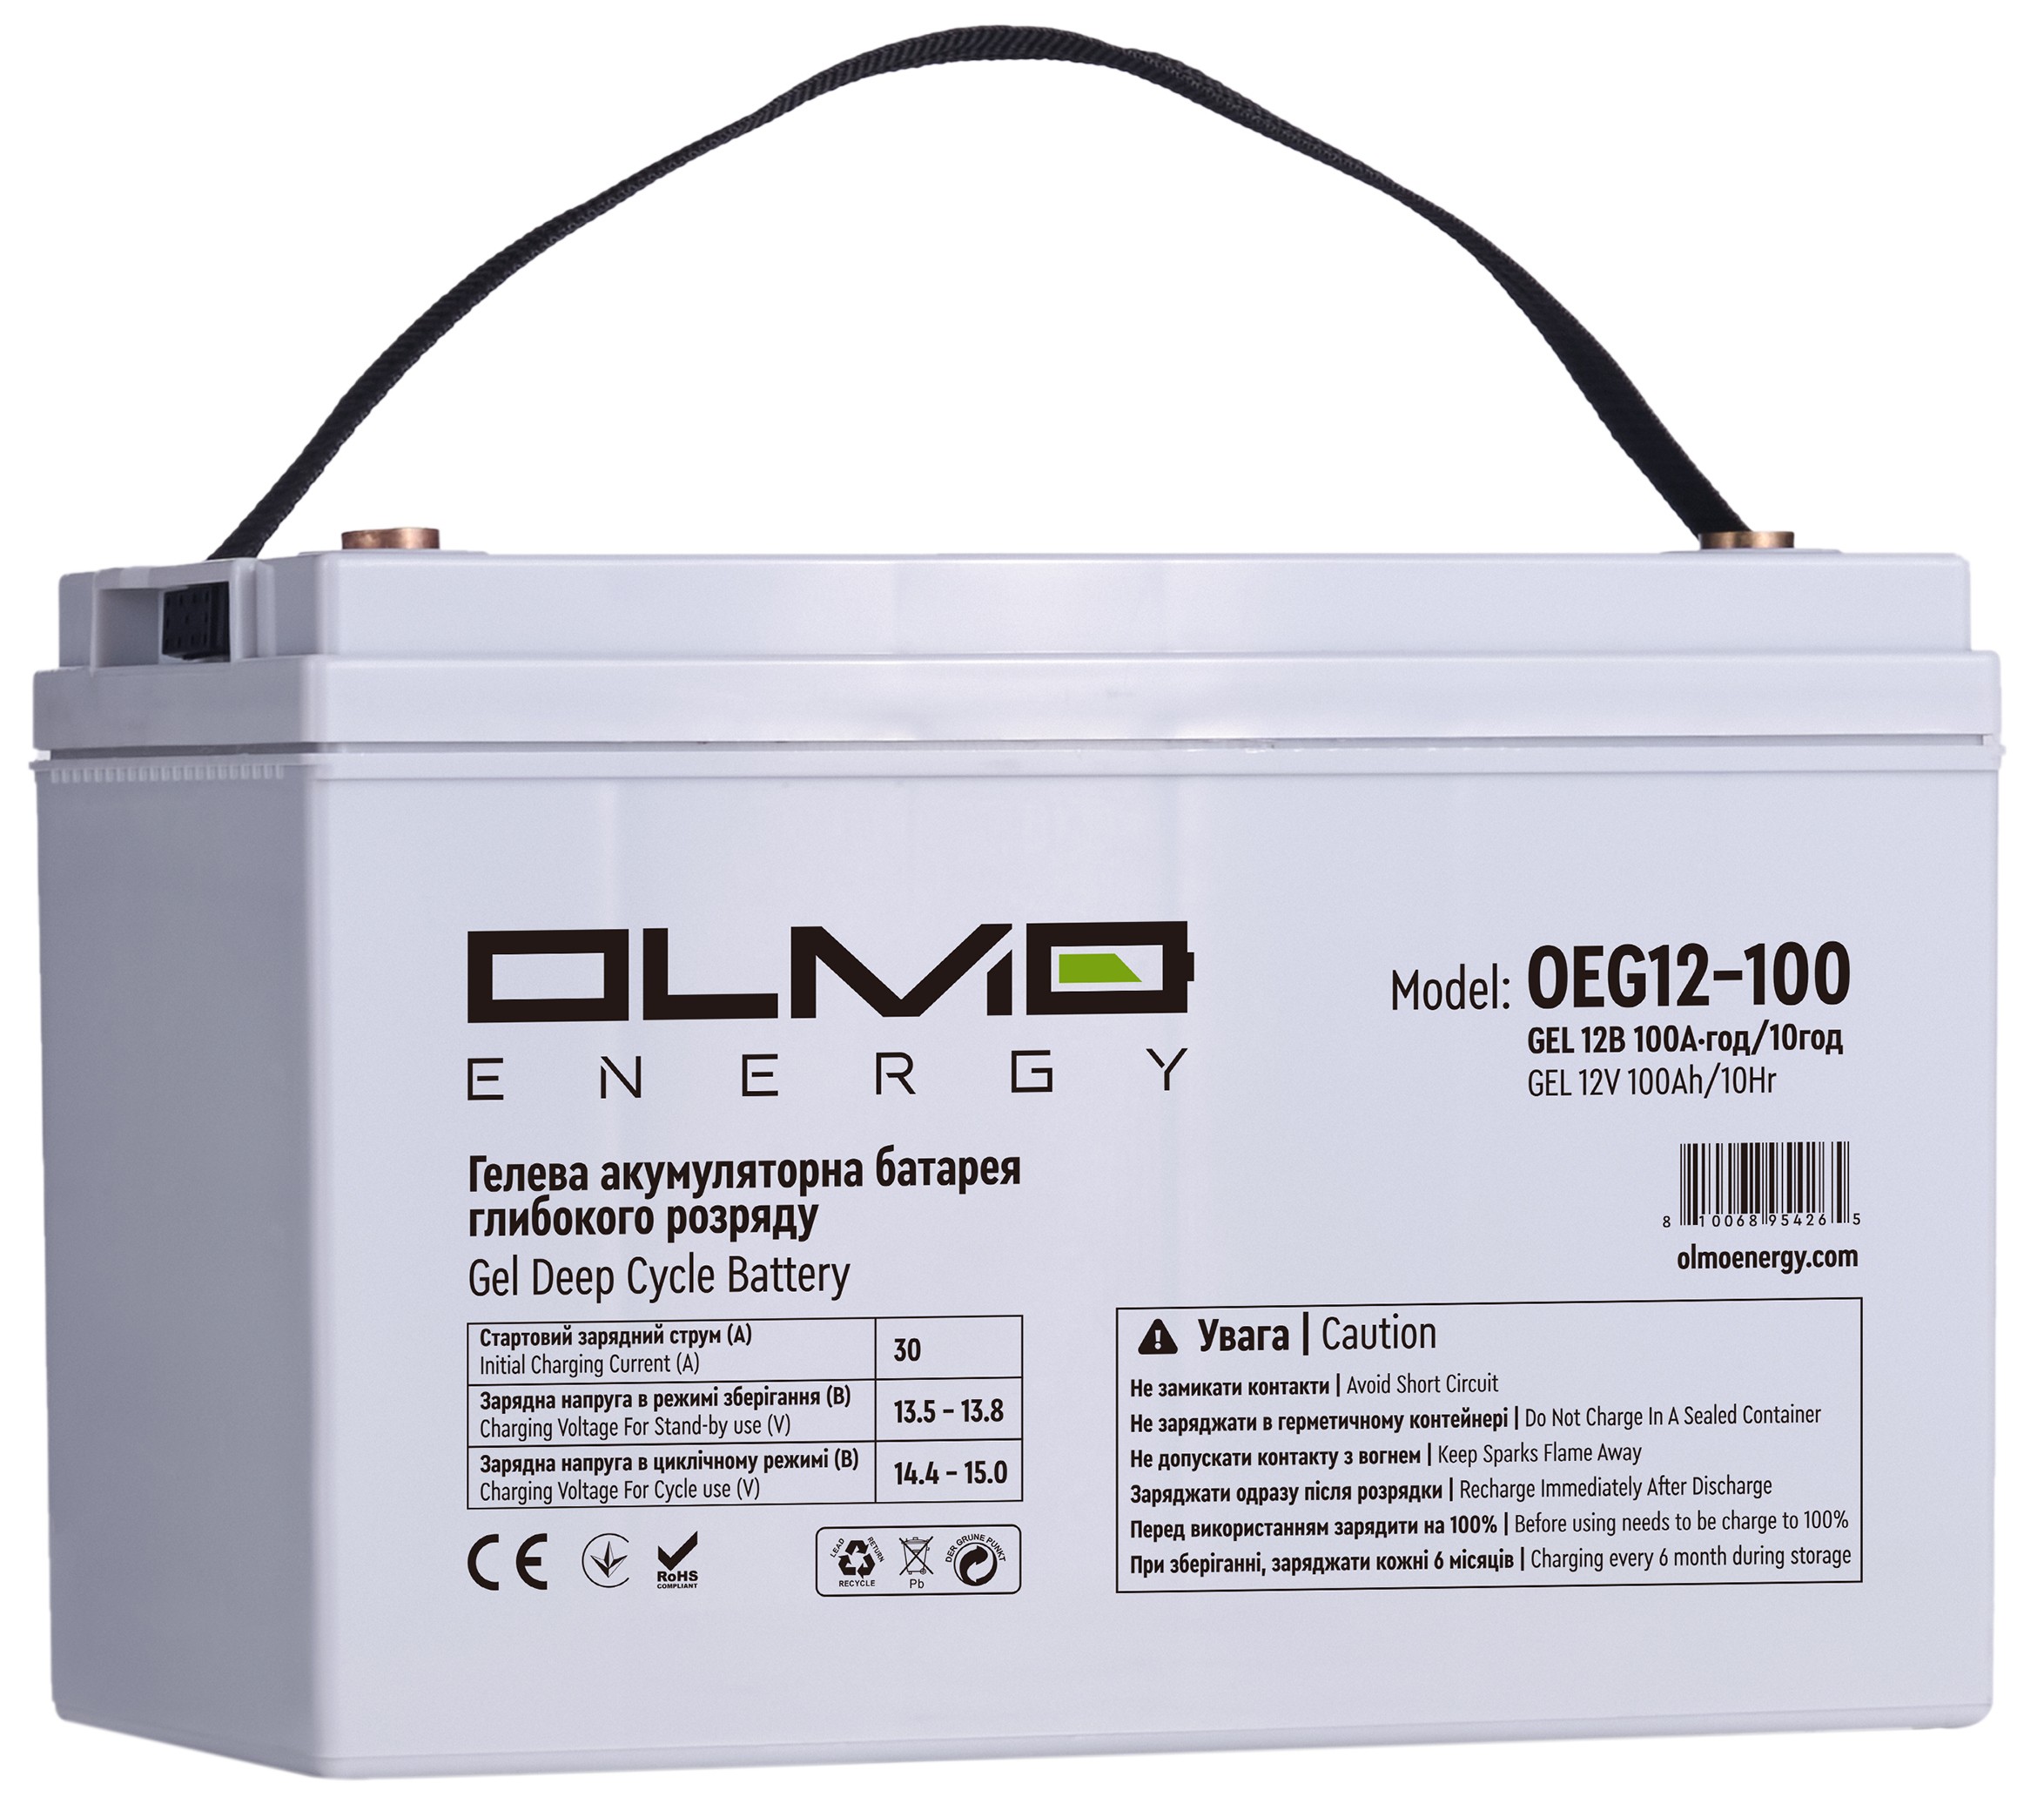 Акумуляторна батарея OLMO Energy OEG12-100 в інтернет-магазині, головне фото